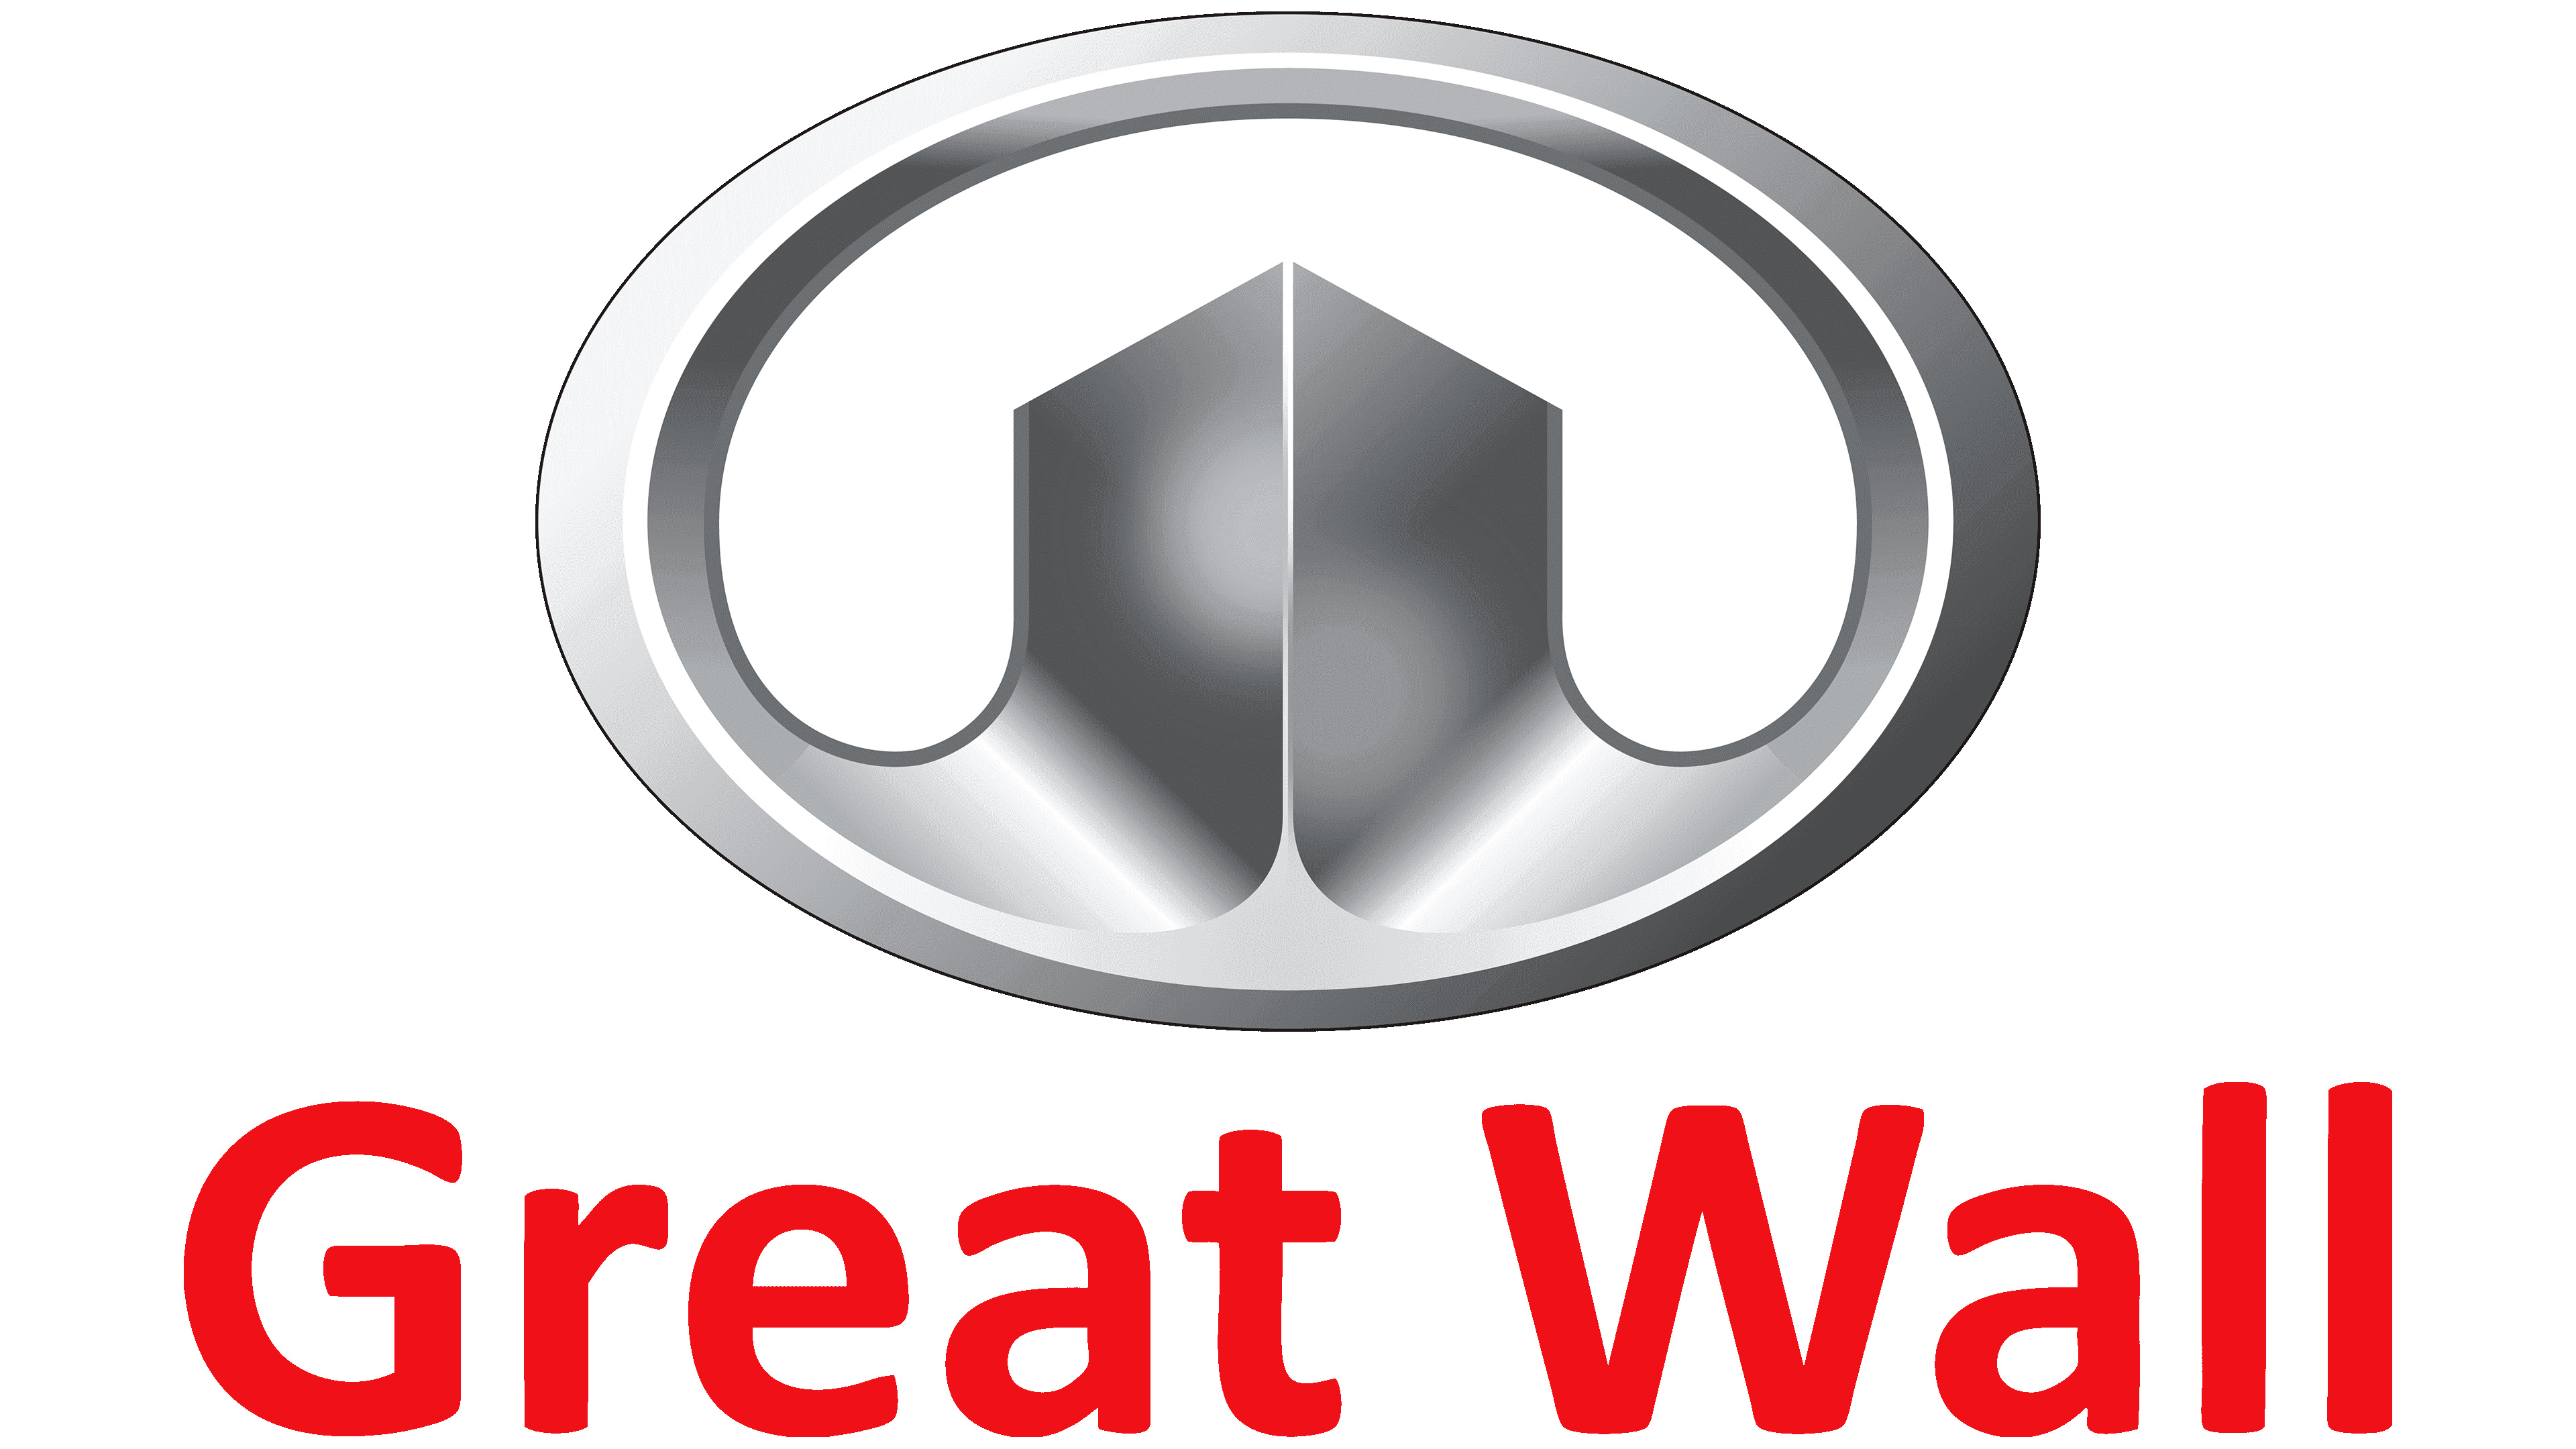 Great Wall Motors, Brand logo, Symbol meaning, Automotive brand, 3840x2160 4K Desktop